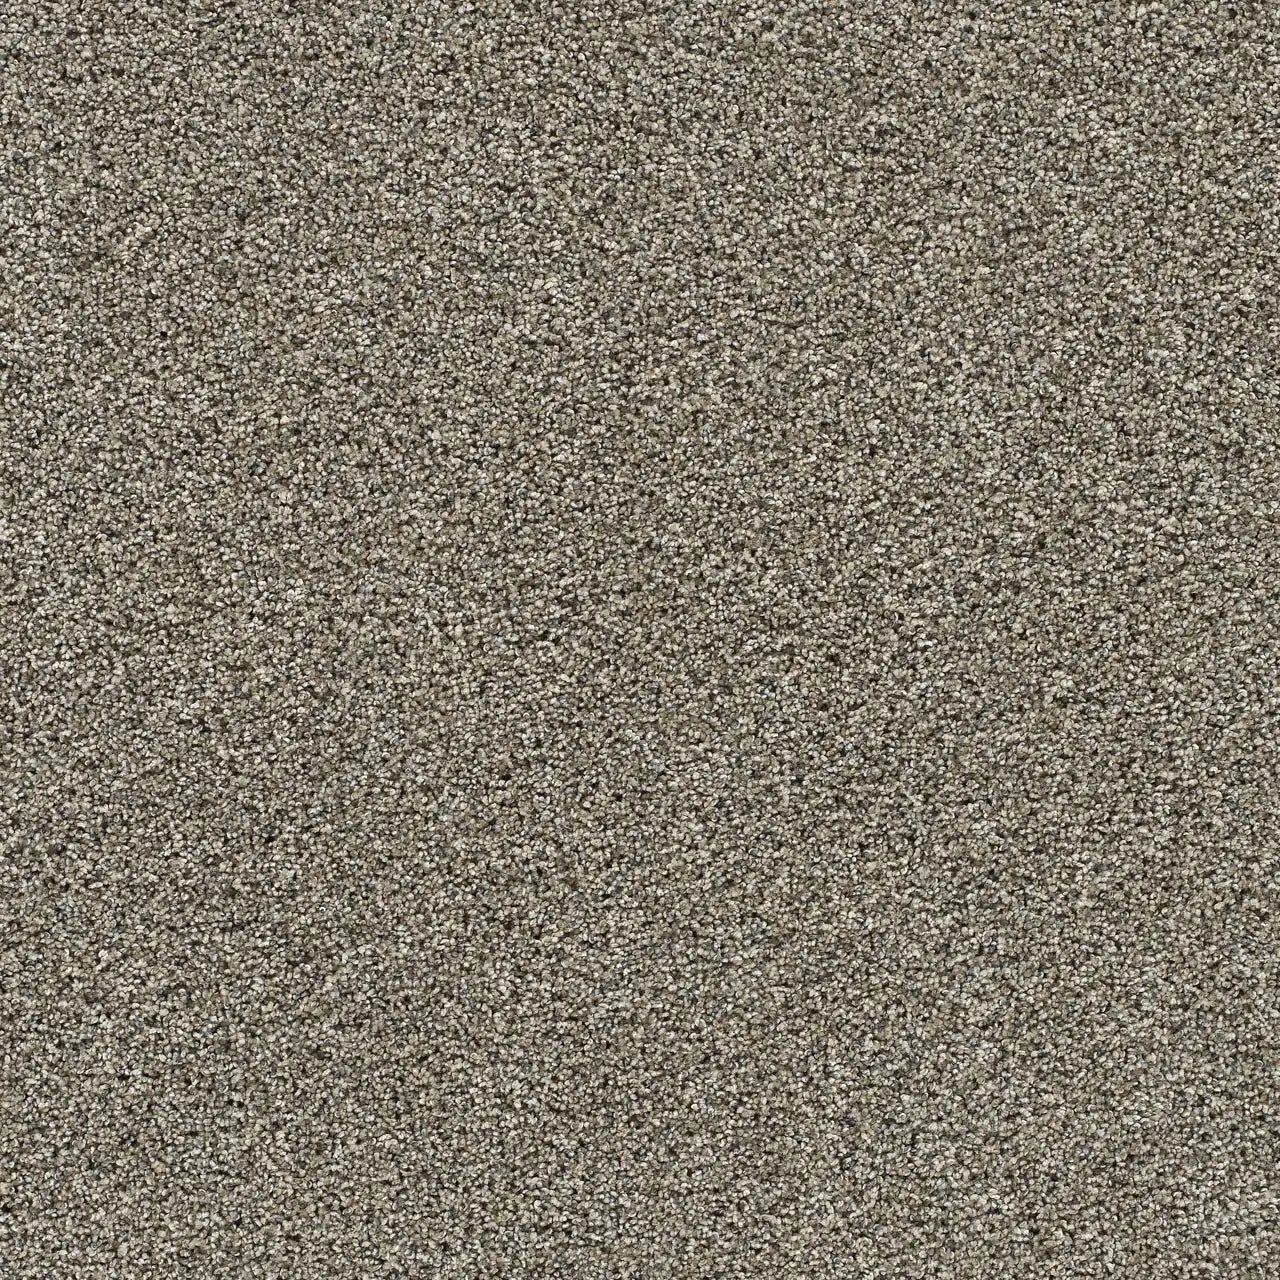 Warm Spice by Dream Weaver carpet sold by Calhoun's Flooring, Springfield, IL